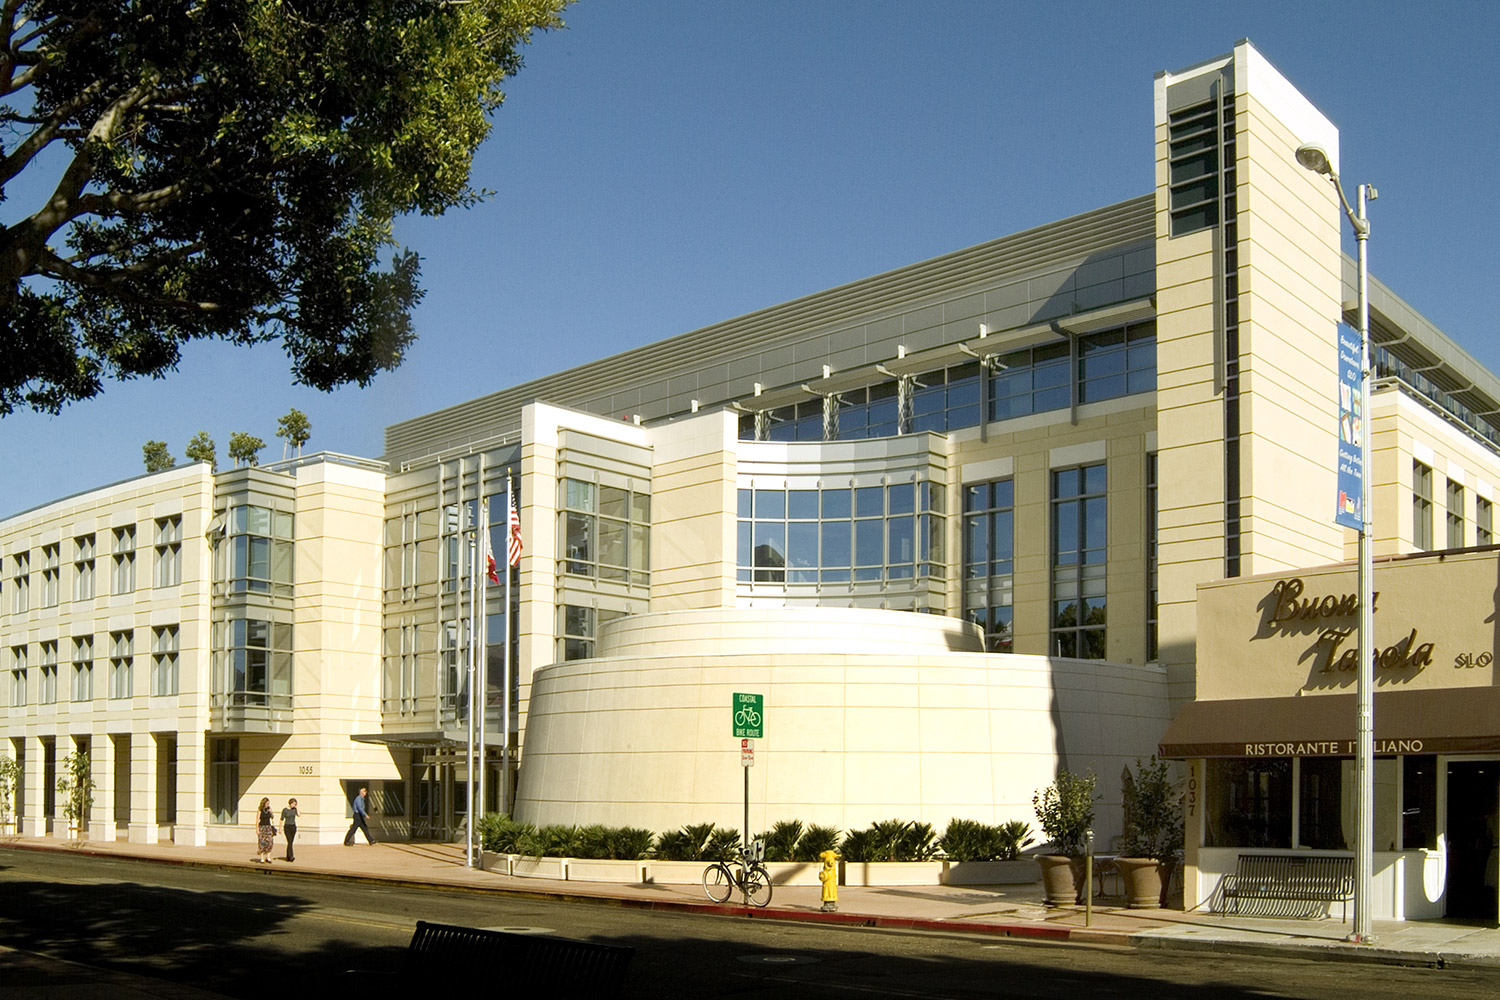 The County of San Luis Obispo New Government Center located at the corner of Monterey Street and Santa Rosa in San Luis Obispo